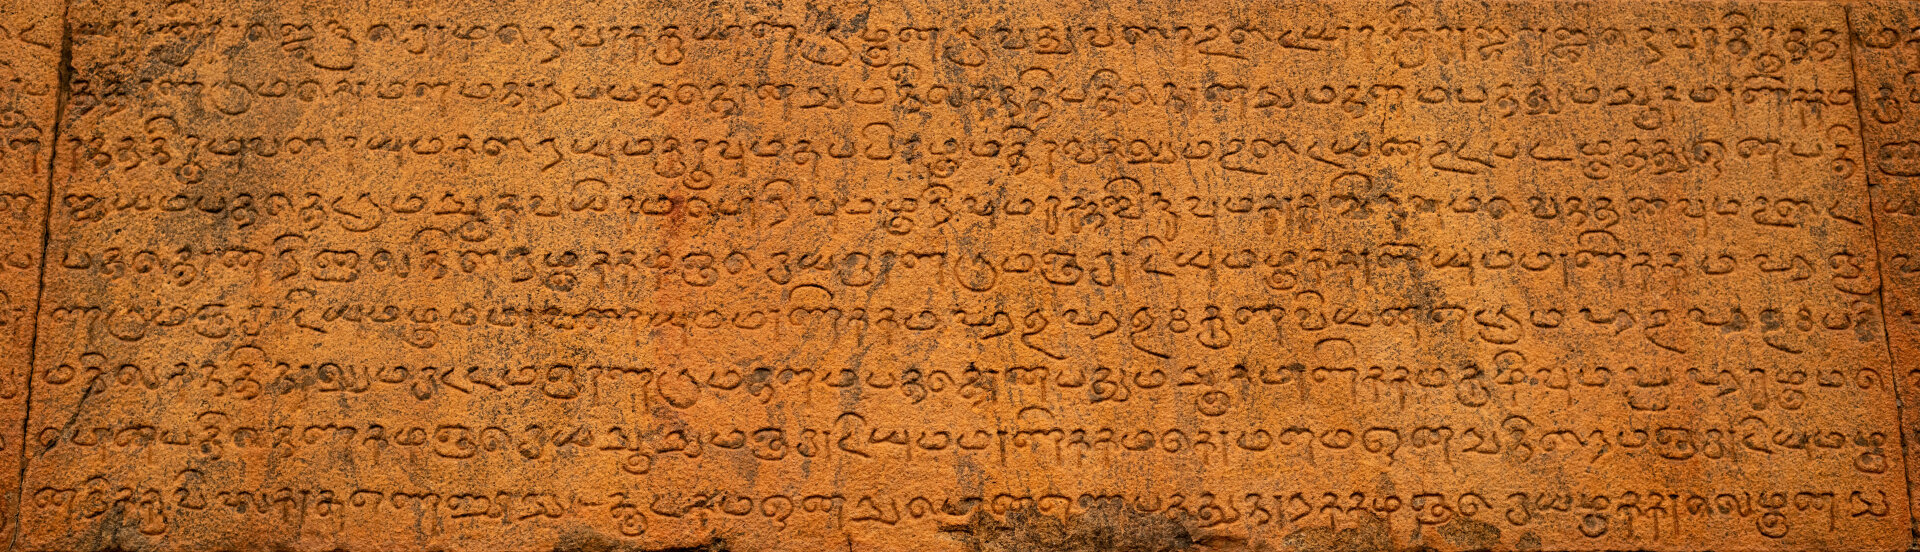 1000 Years Old Ancient Tamil language Ancient Words Stone script in Thanjavur Brihadeeswara Temple. Crédit photo : Adobe Stock